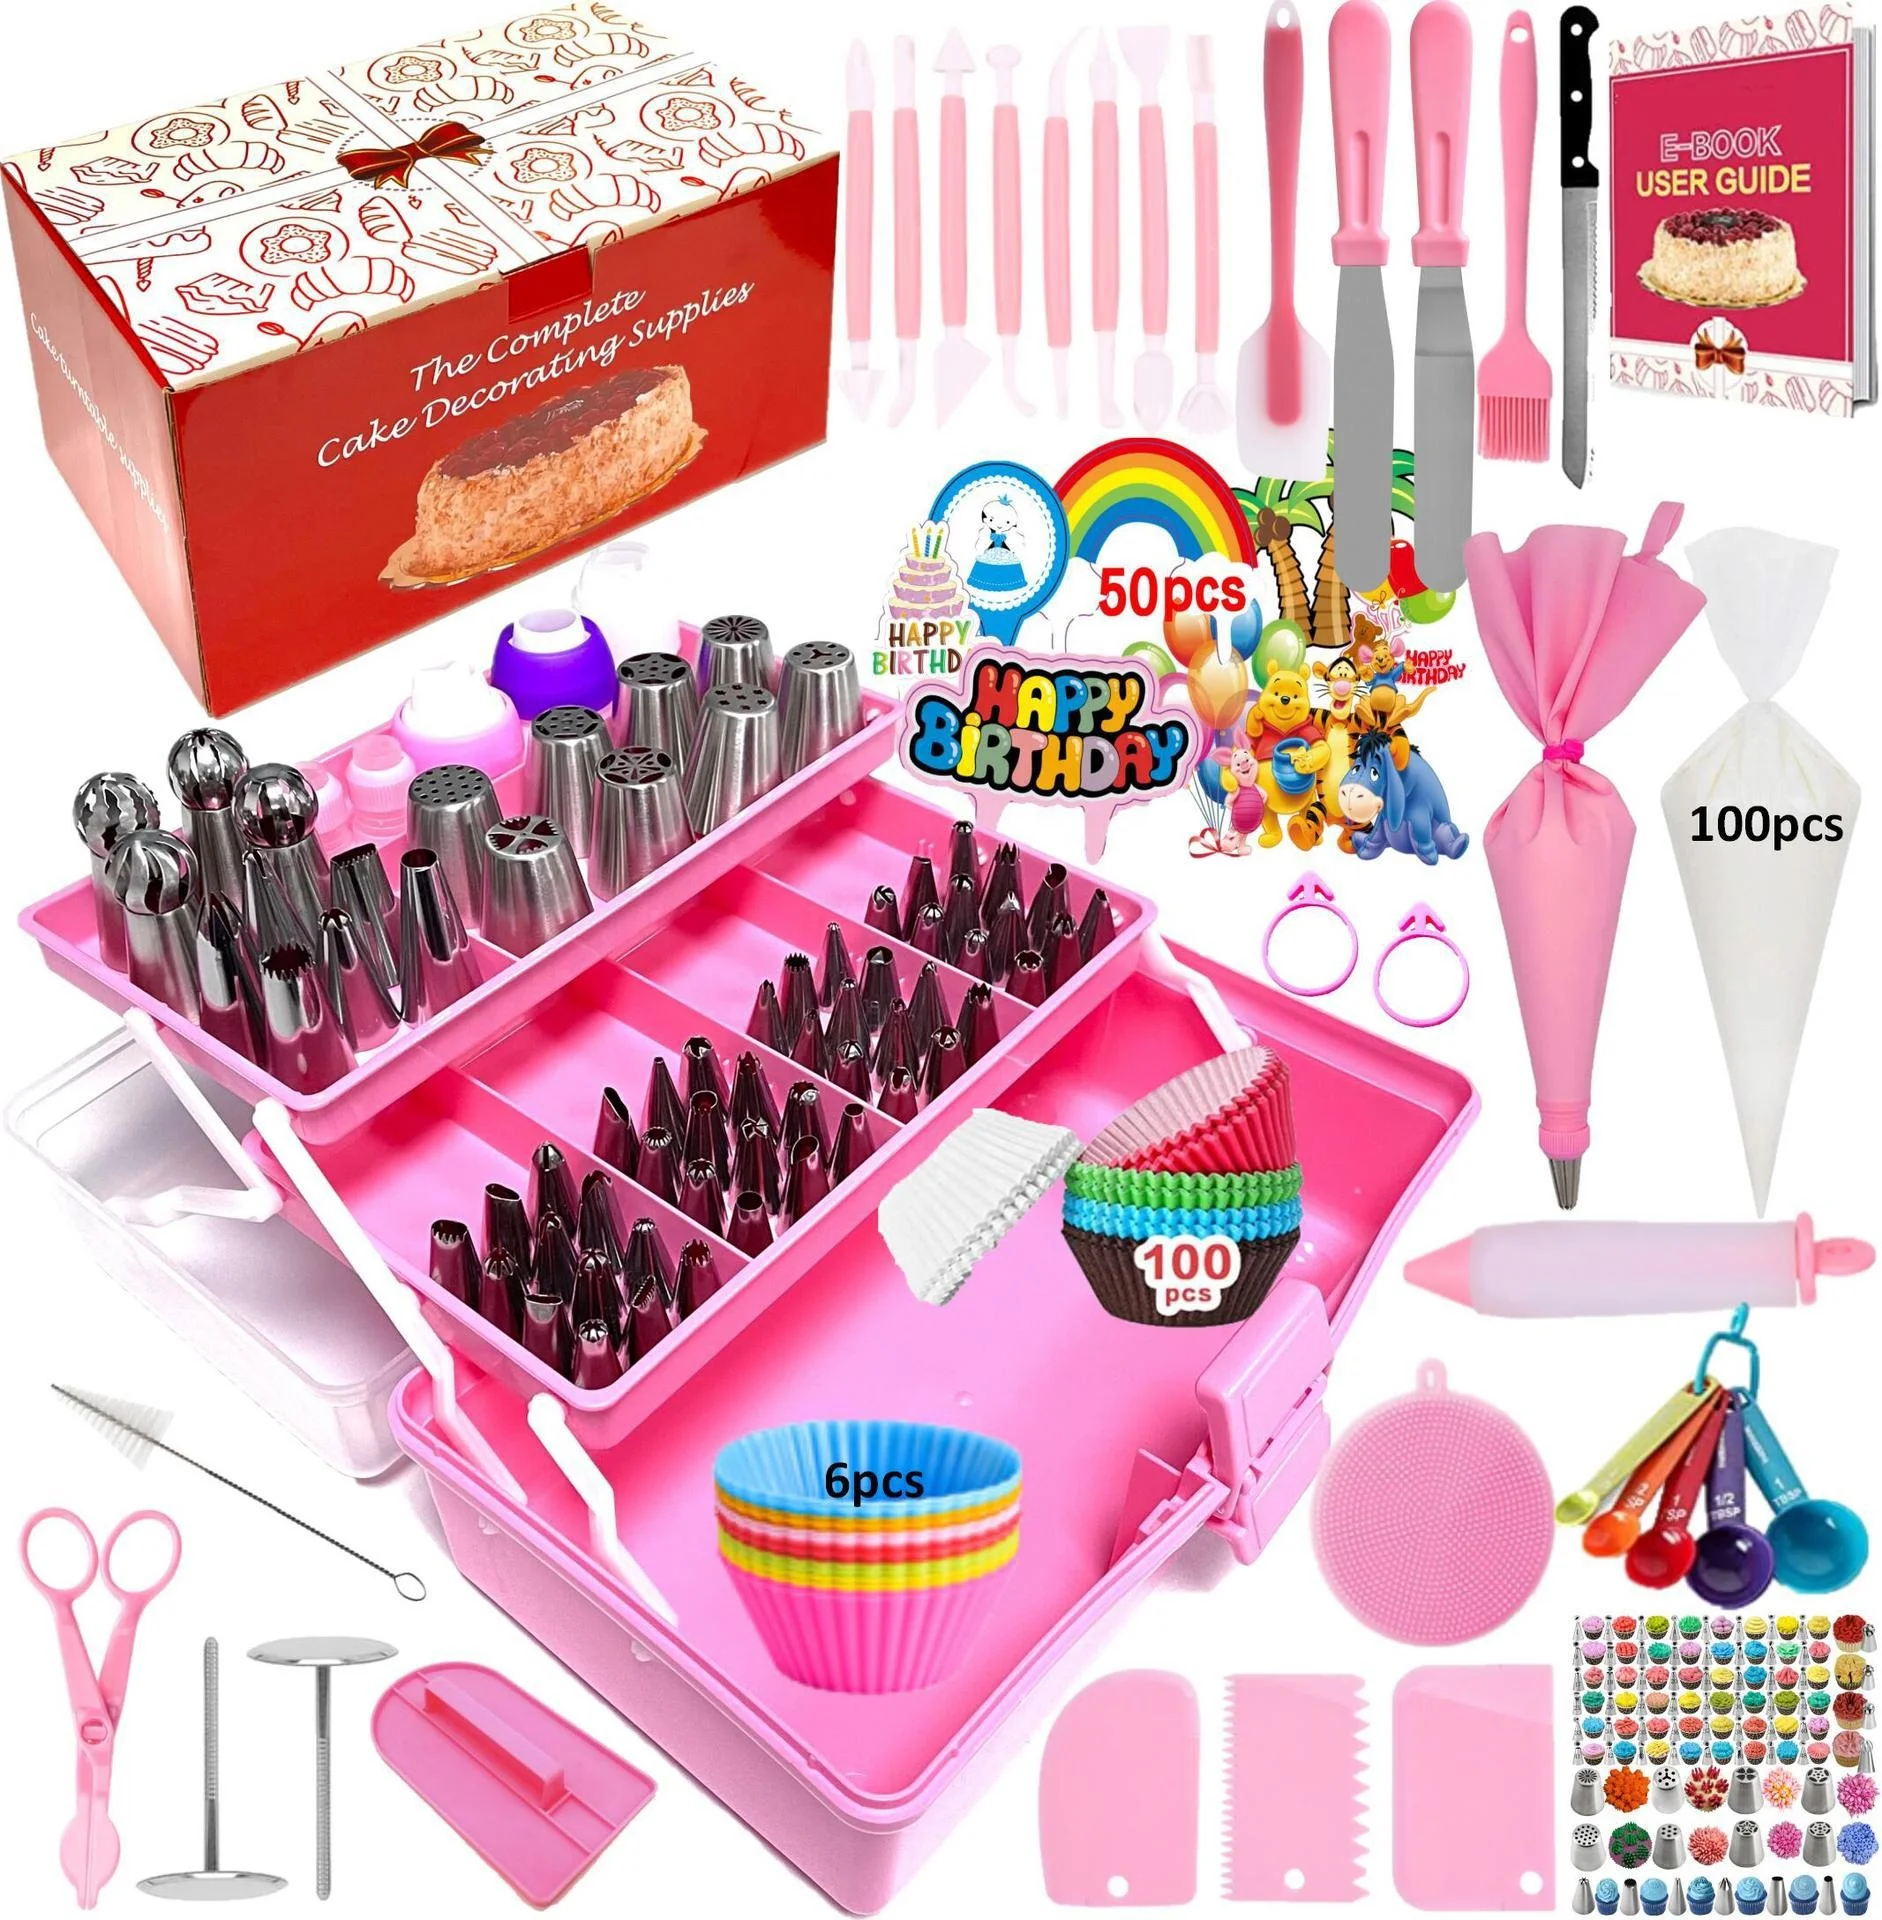 

Cake Decorating Tips Set Amazon New Hot 359 PCS Pastry Cookie Cupcake Decorating Supplies Baking Tools Kit Piping Icing Nozzles, Pink